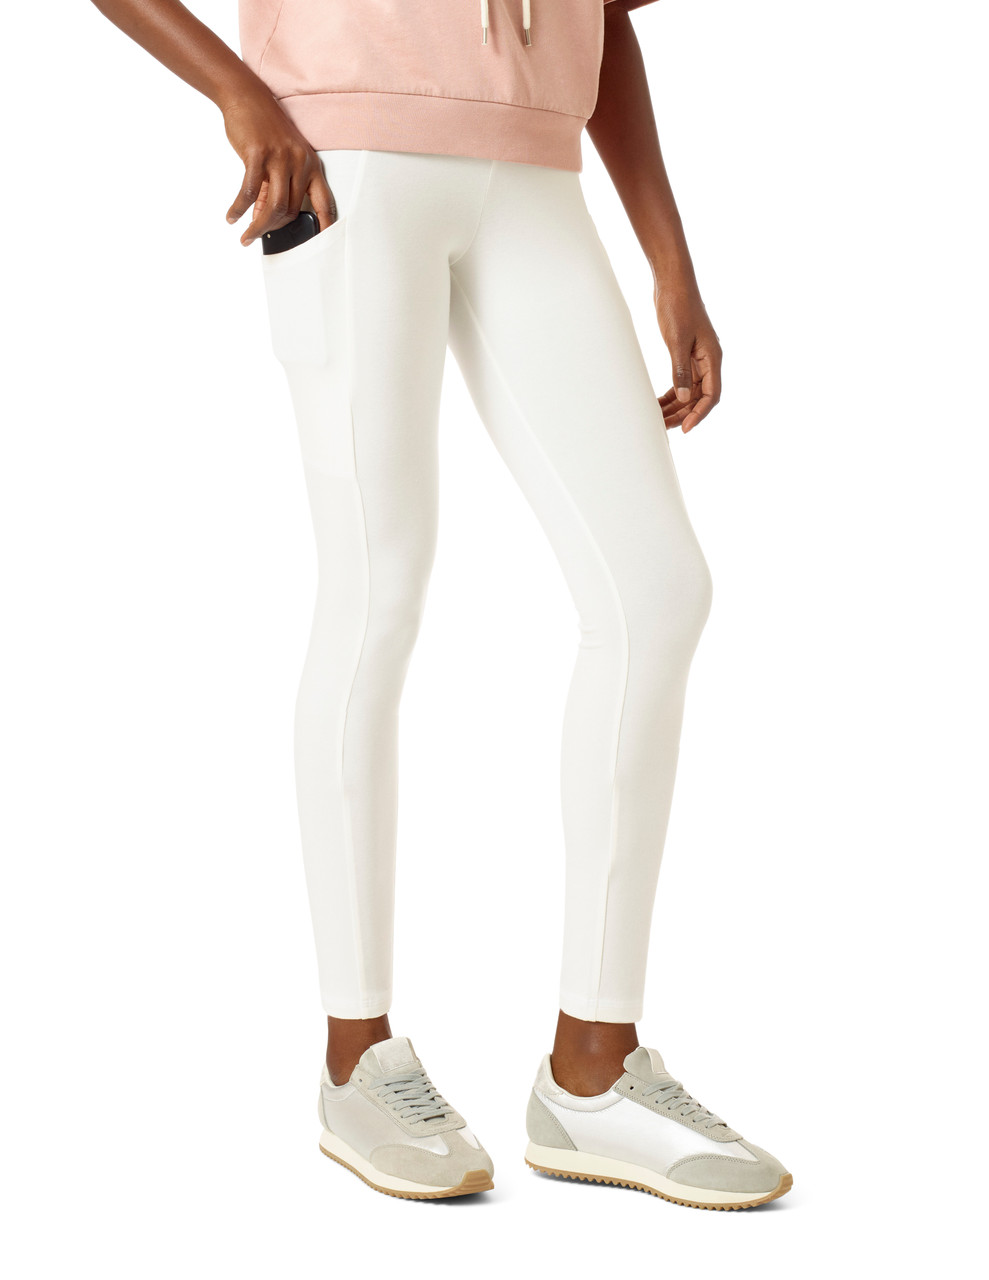 Ribbed leggings - White - Ladies | H&M IN